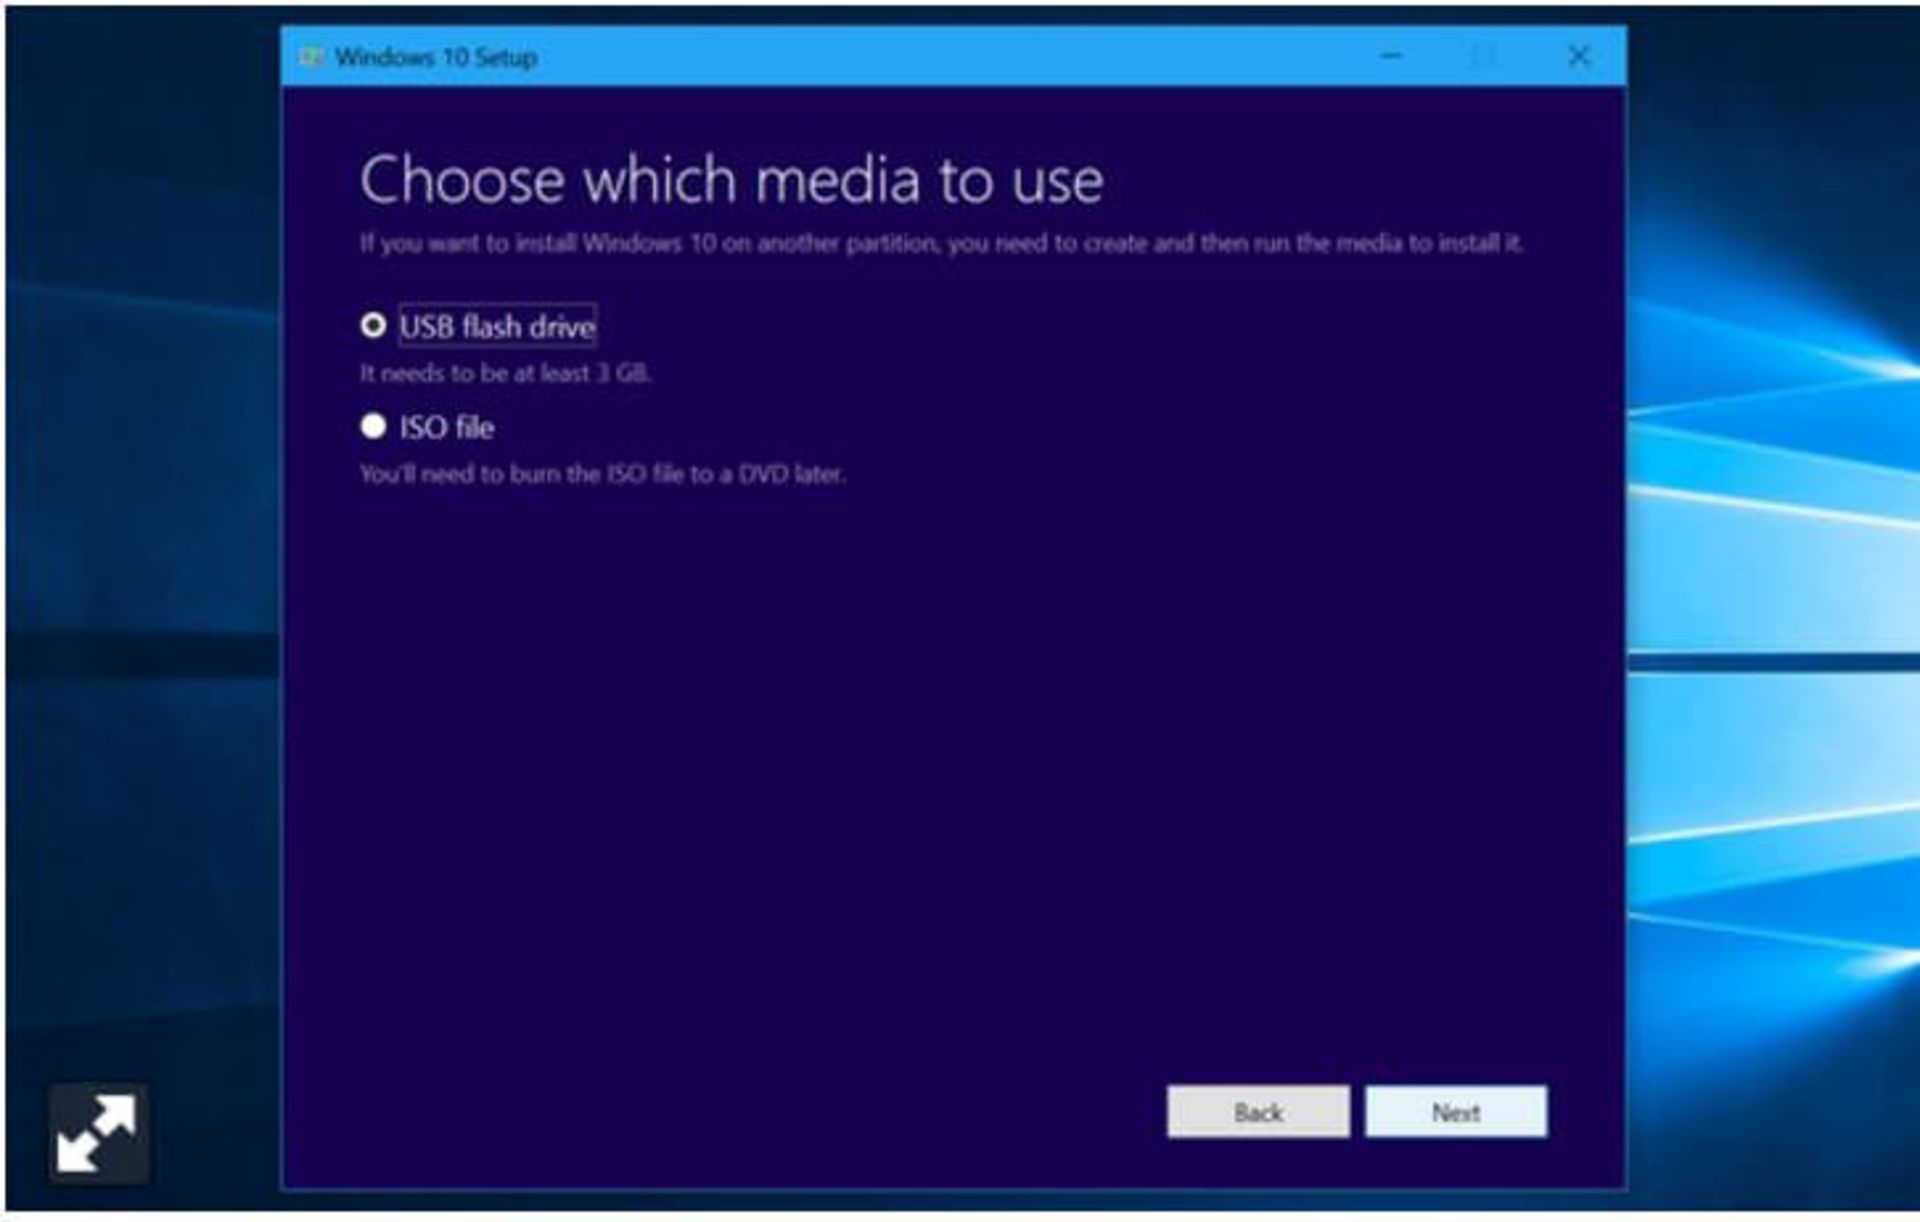 Use Microsoft's Windows 10 download too